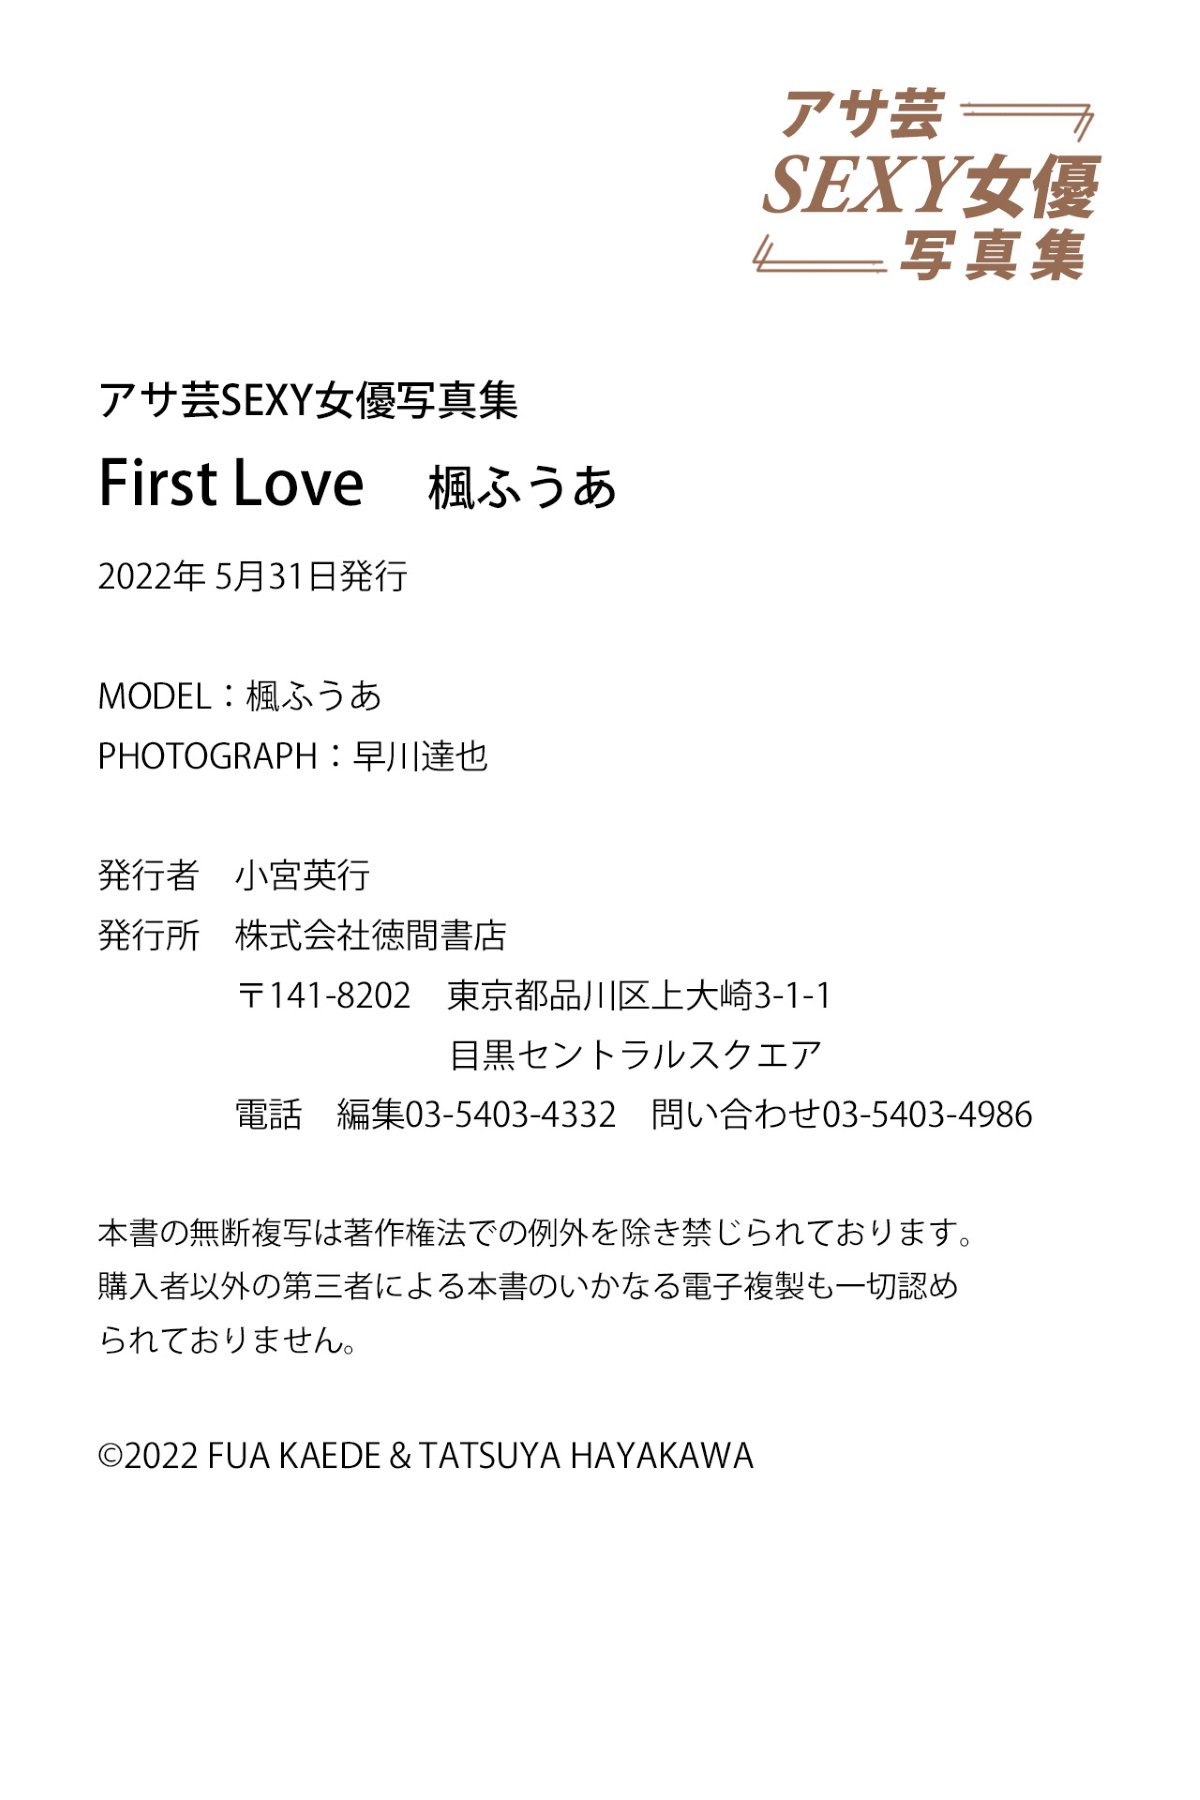 Photobook Fua Kaede 楓ふうあ First Love 2022 05 27 0032 8488565888.jpg